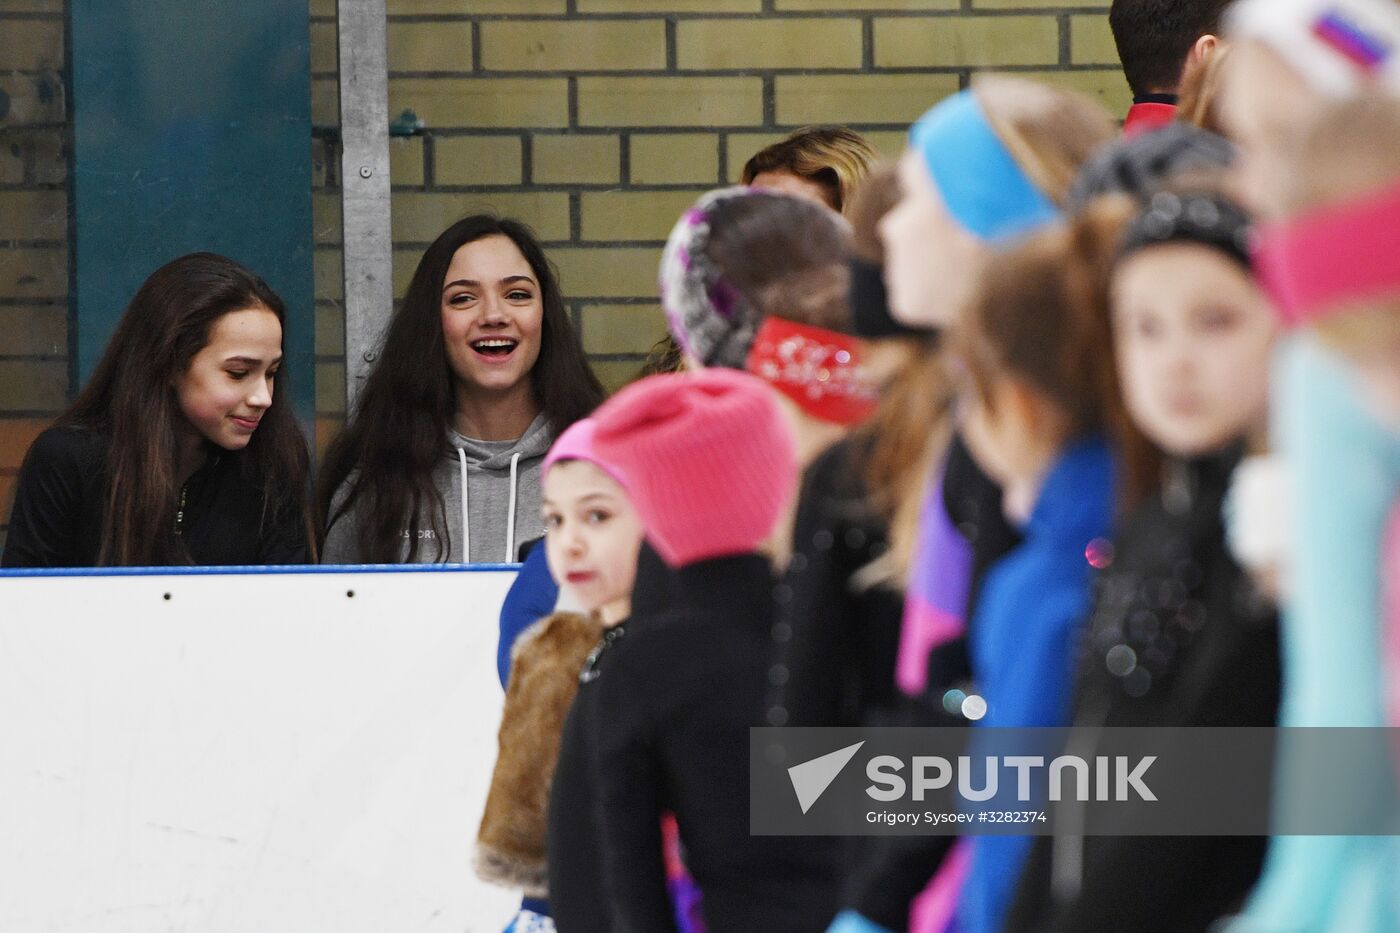 Figure skaters Medvedeva and Zagitova are seen off to PyeongChang Olympics